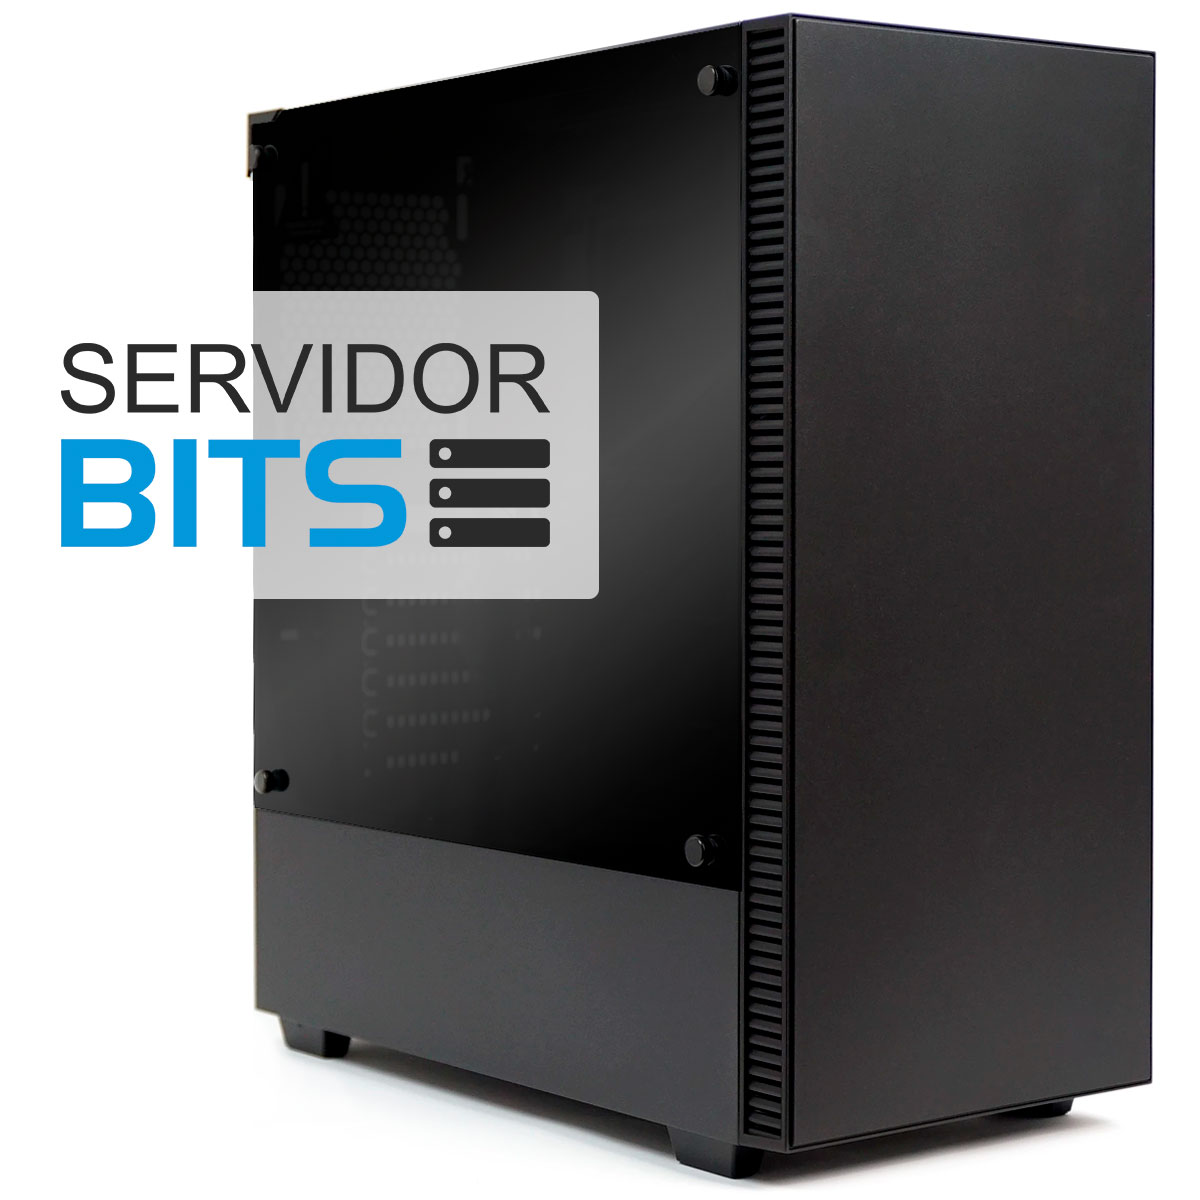 Servidor Bits 2021 - Intel® Xeon® E-2124, RAM 16GB, SSD 1TB NVMe